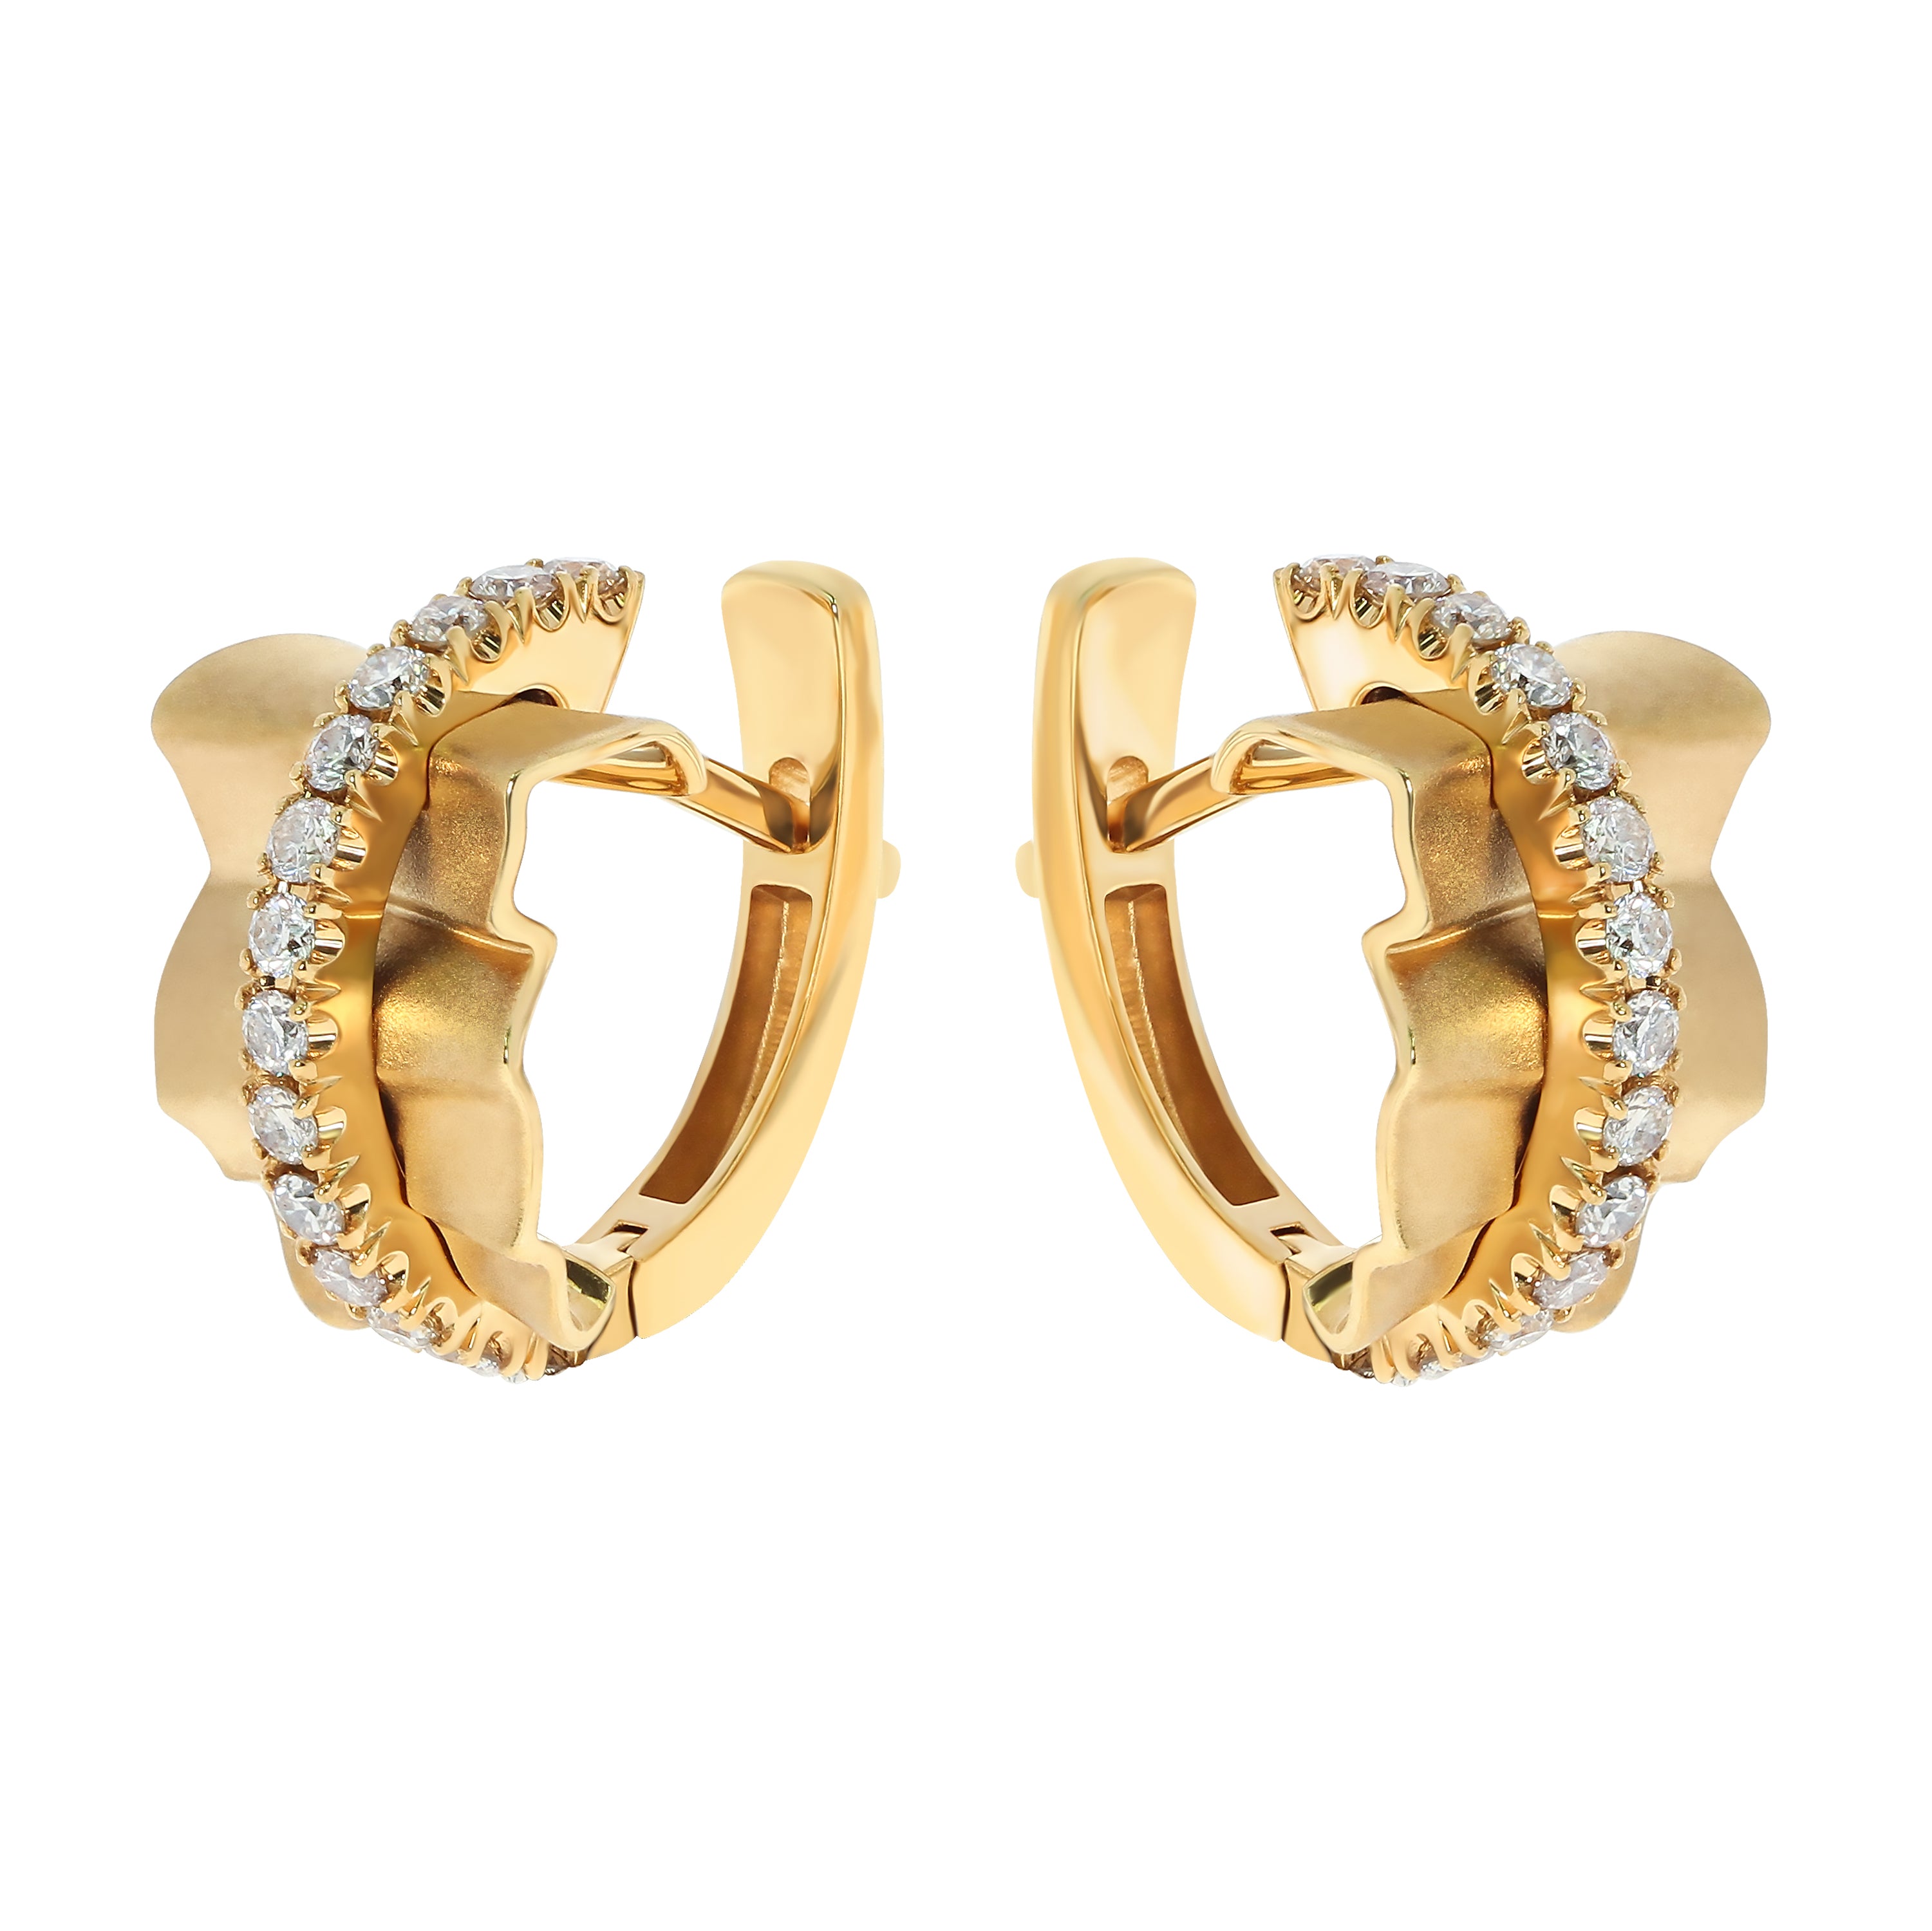 E 0002-0, 18K Yellow Gold, Champagne Diamonds Earrings